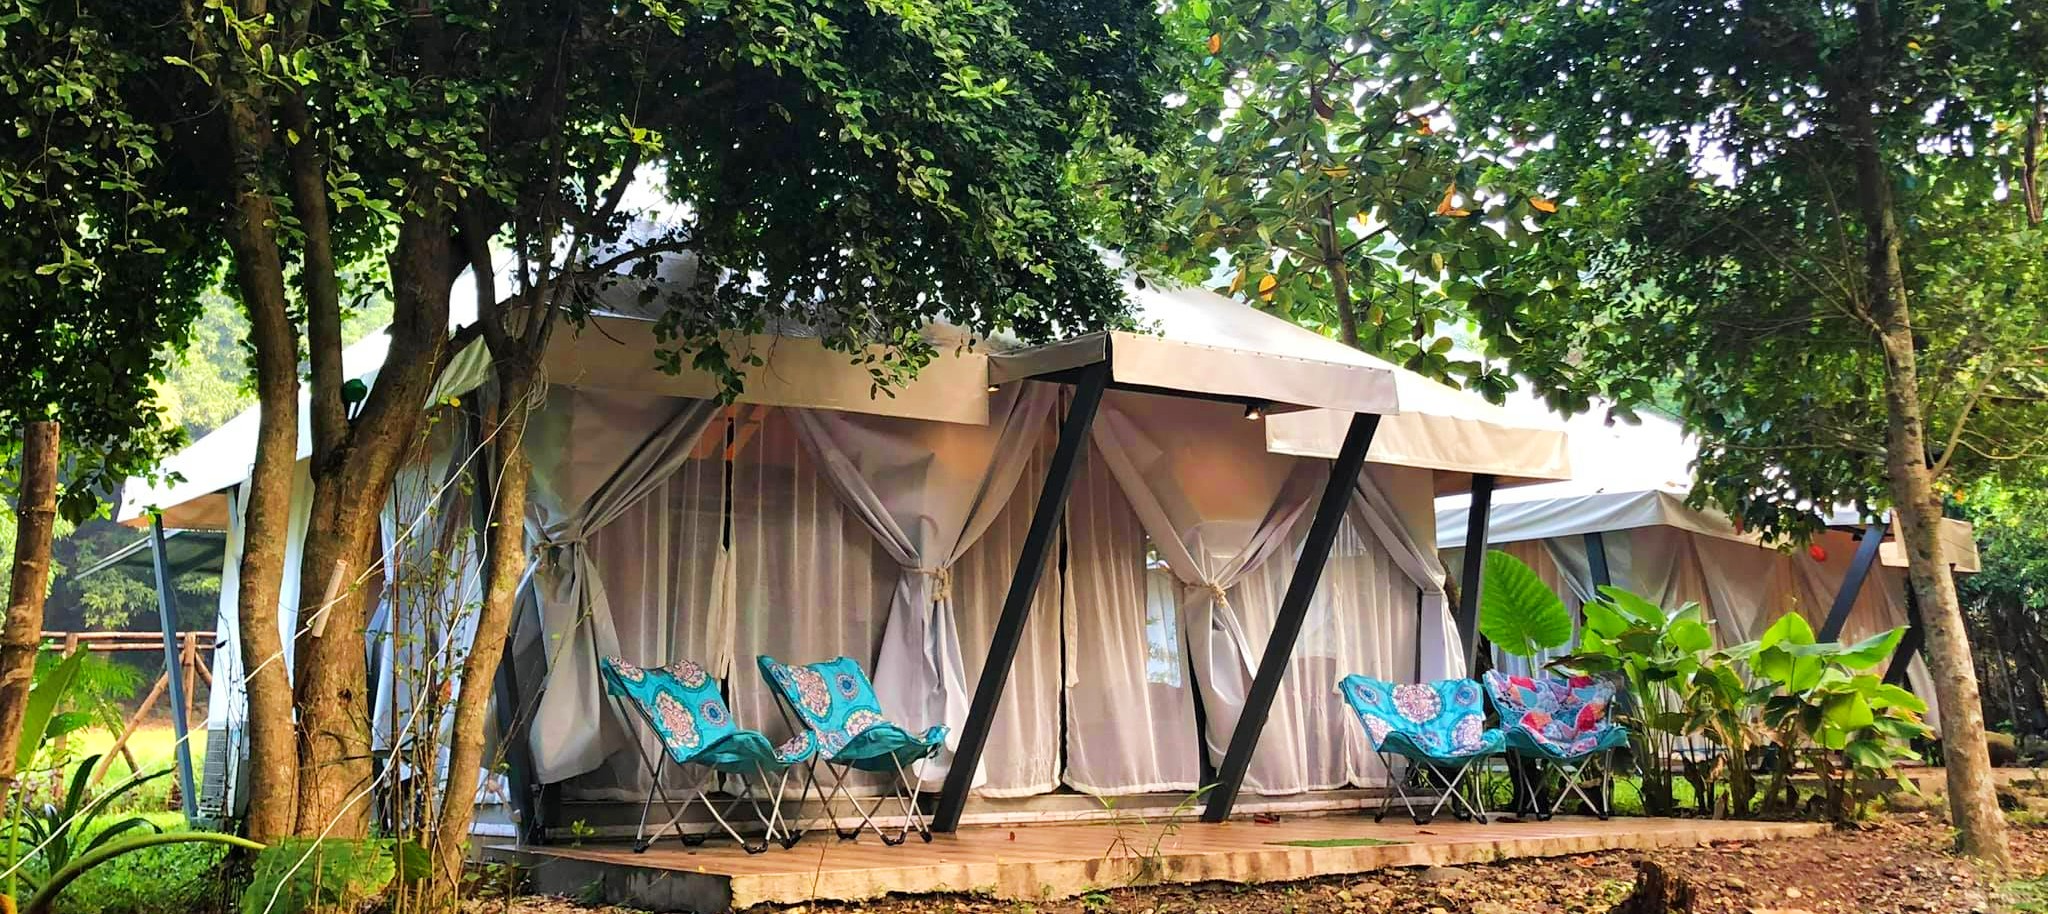 Exterior of Glamping Tent at Playa La Caleta Resort, Morong, Bataan